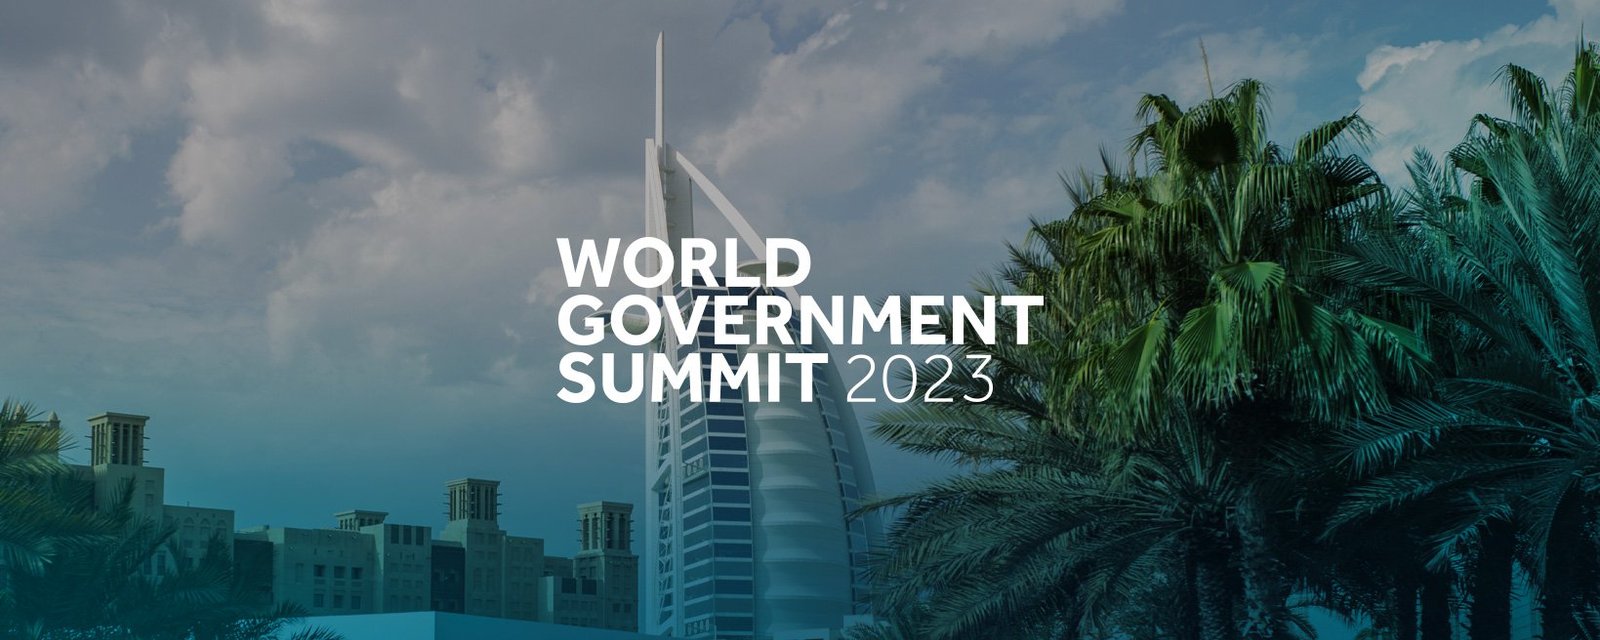 UAE The World Government Summit to emphasize six pillars